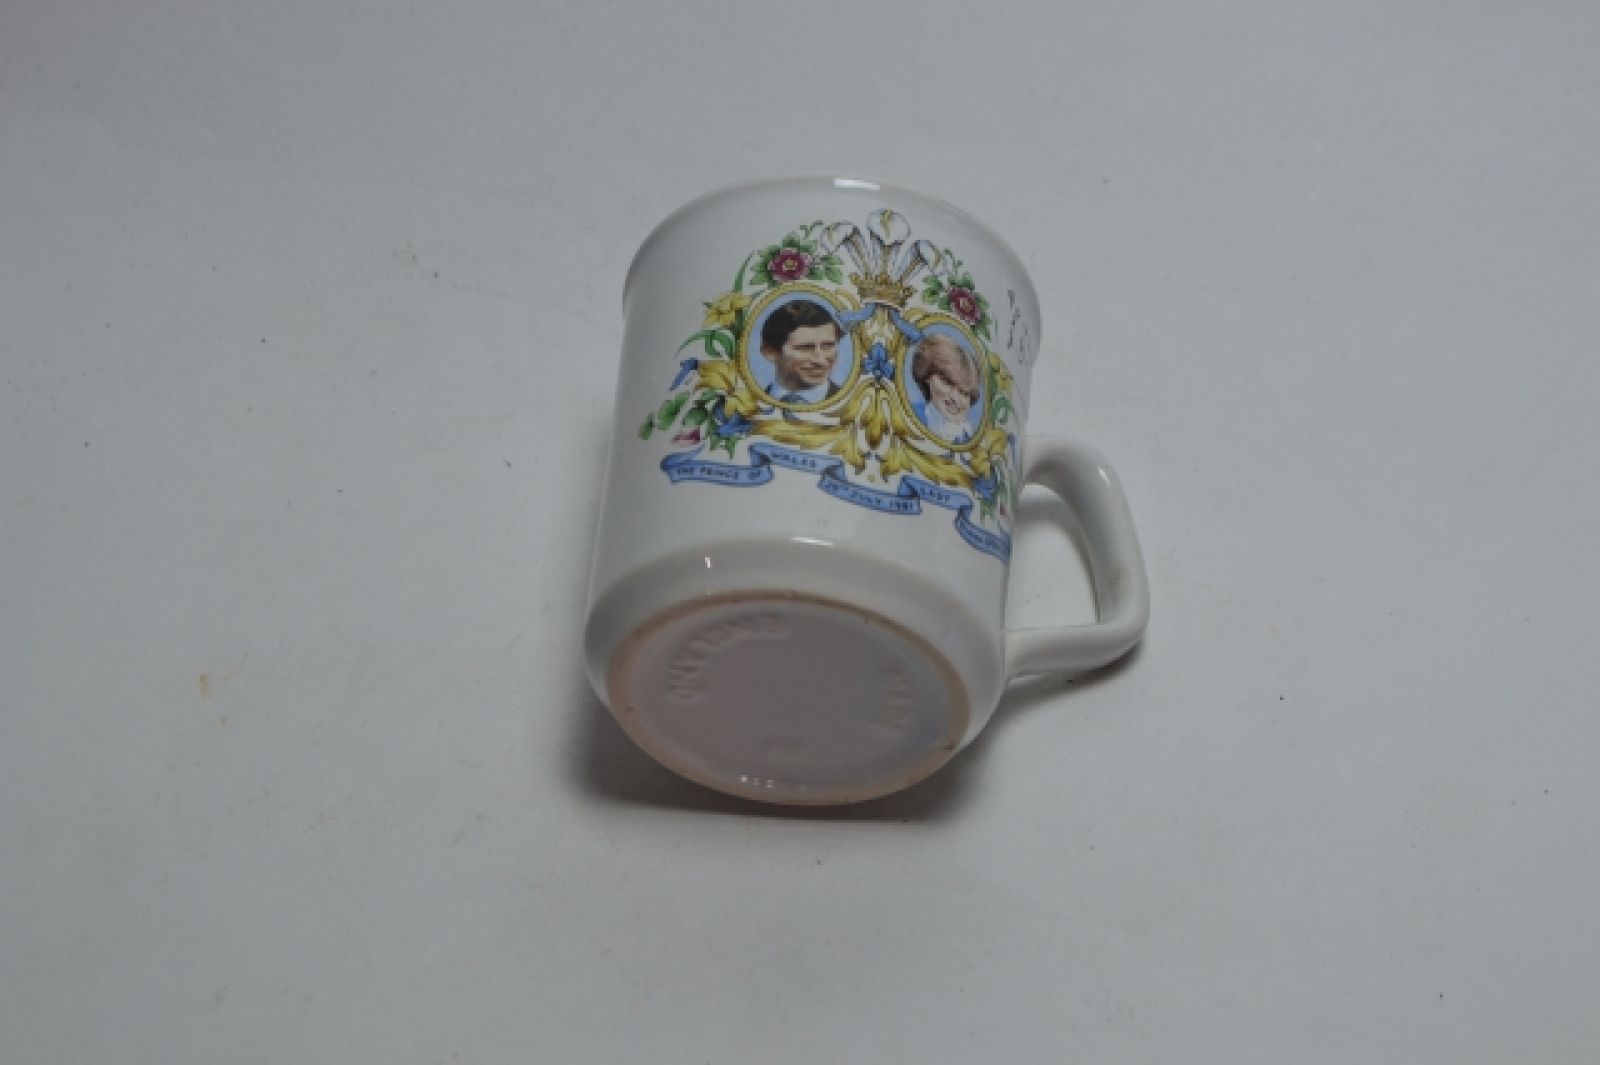 Small Commemorative Mug of Charles and Diana.